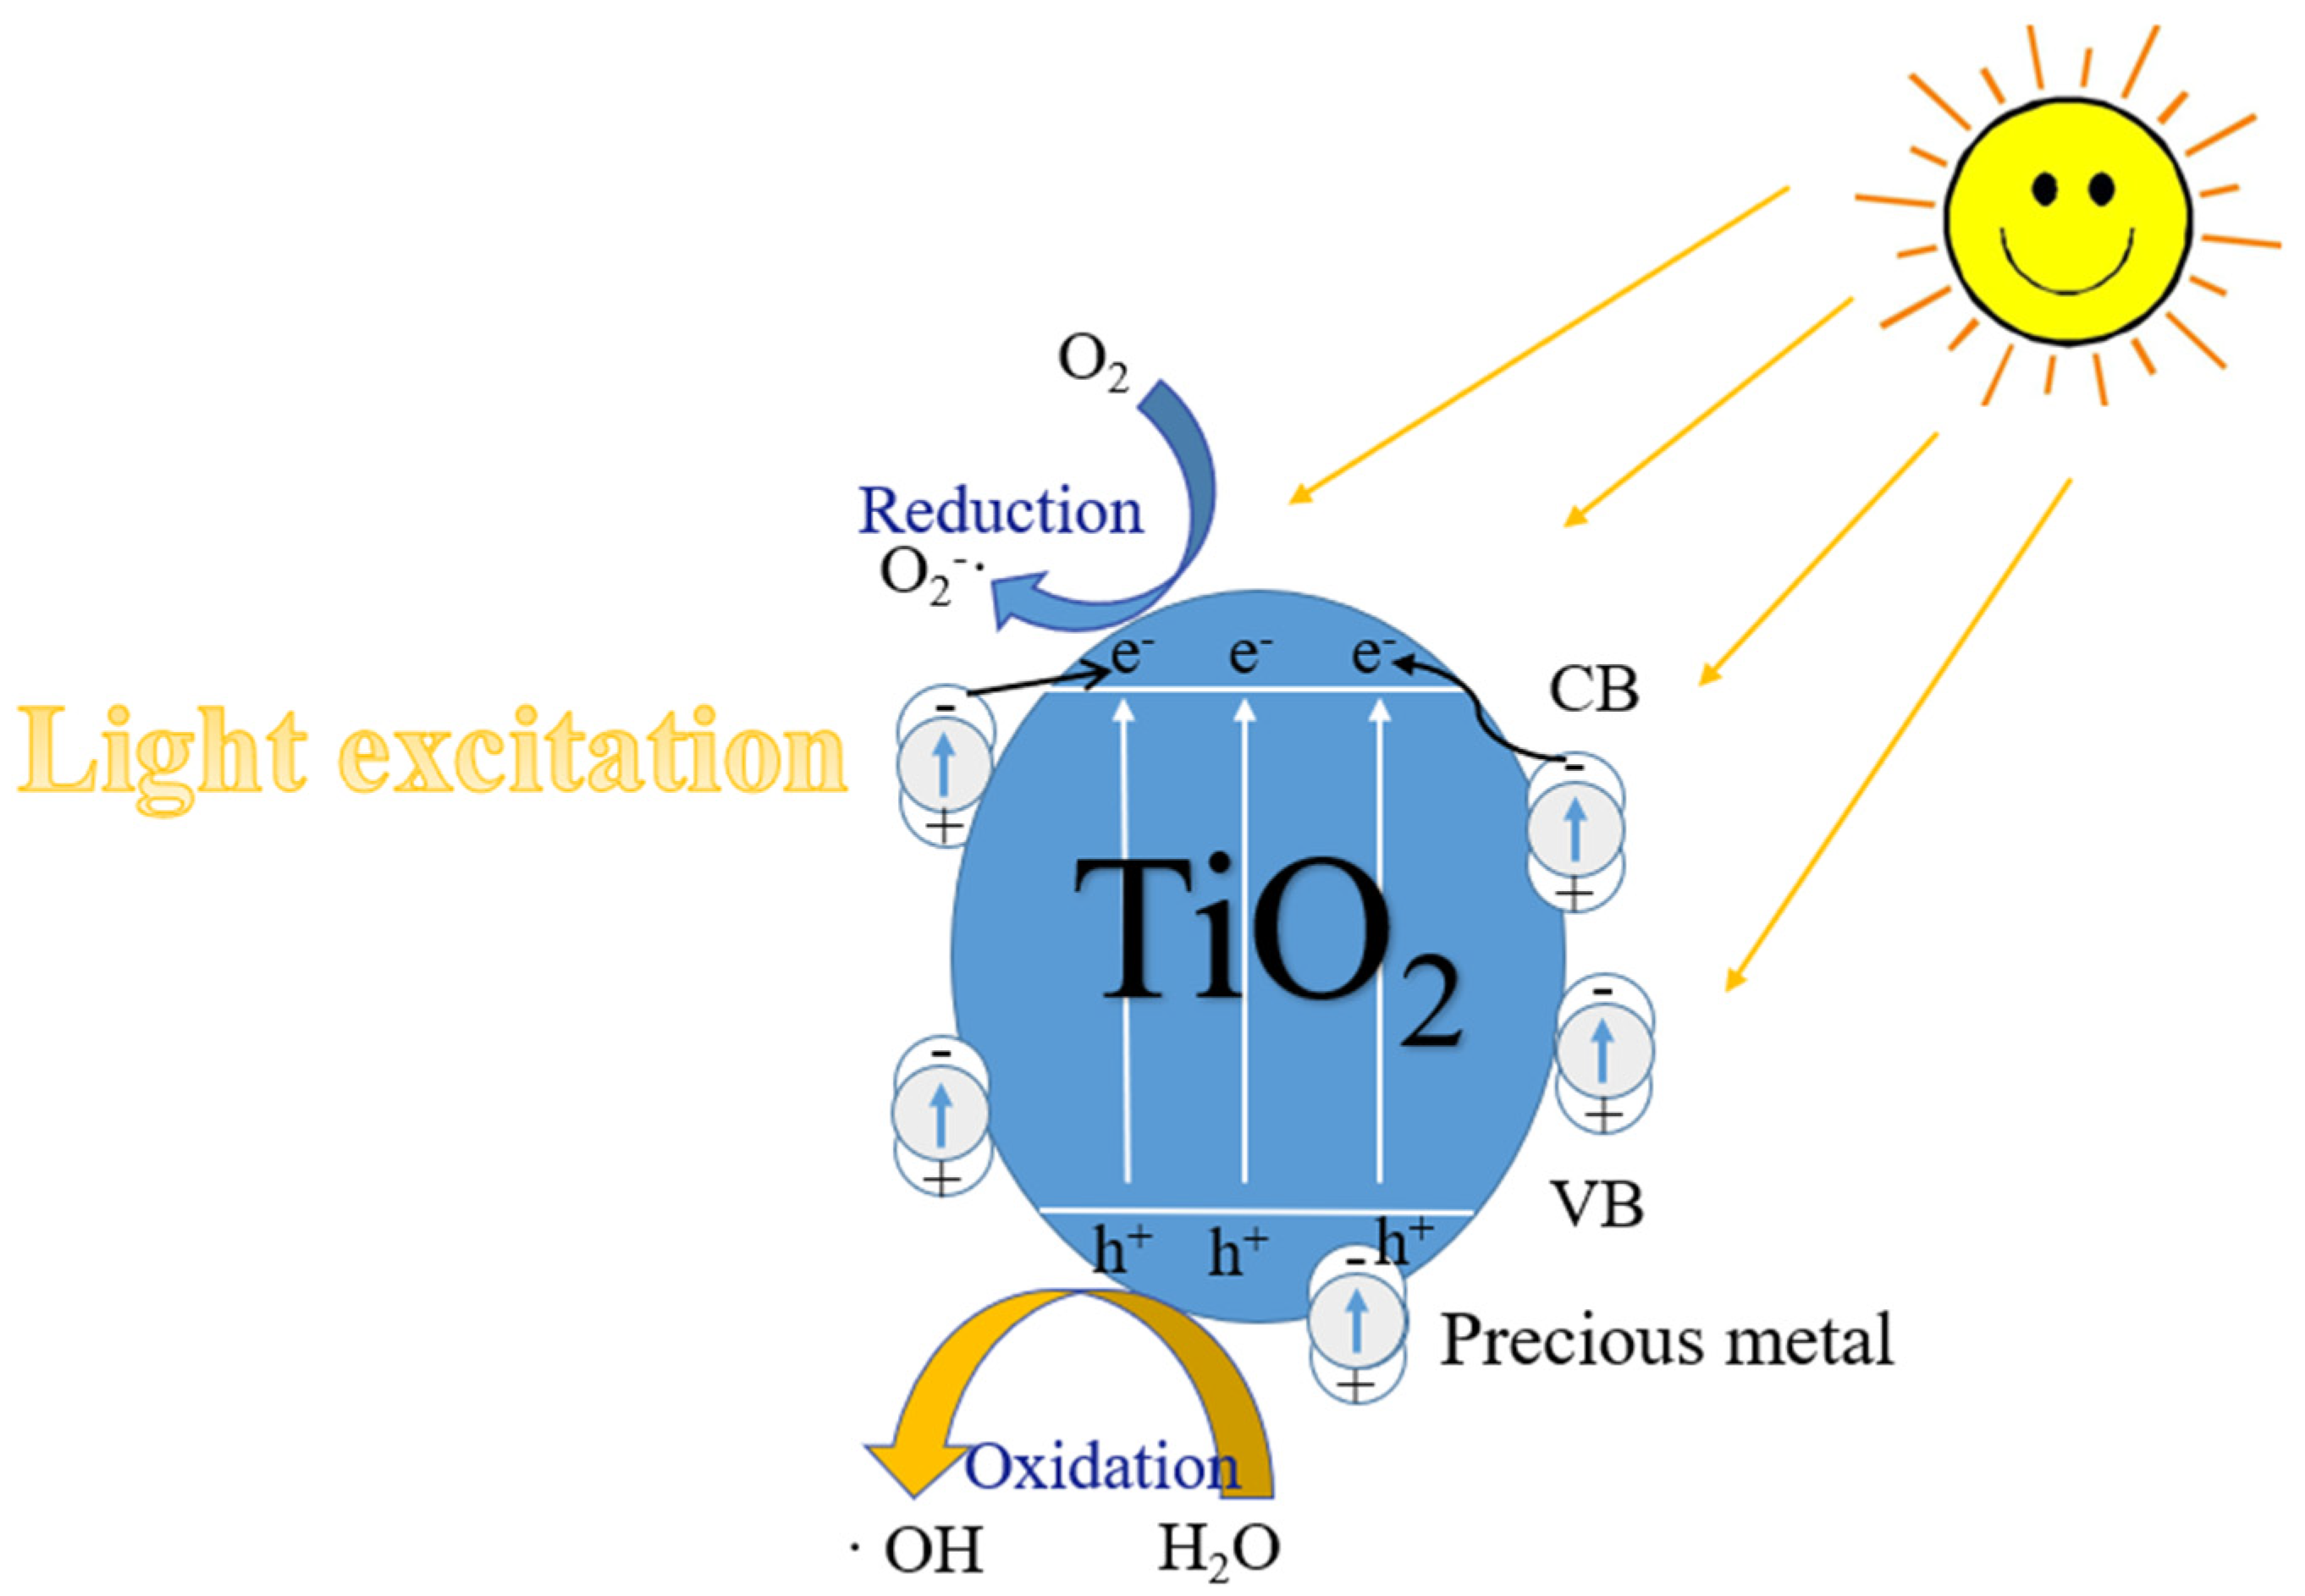 Titanium dioxide inorganic and organic coating modification